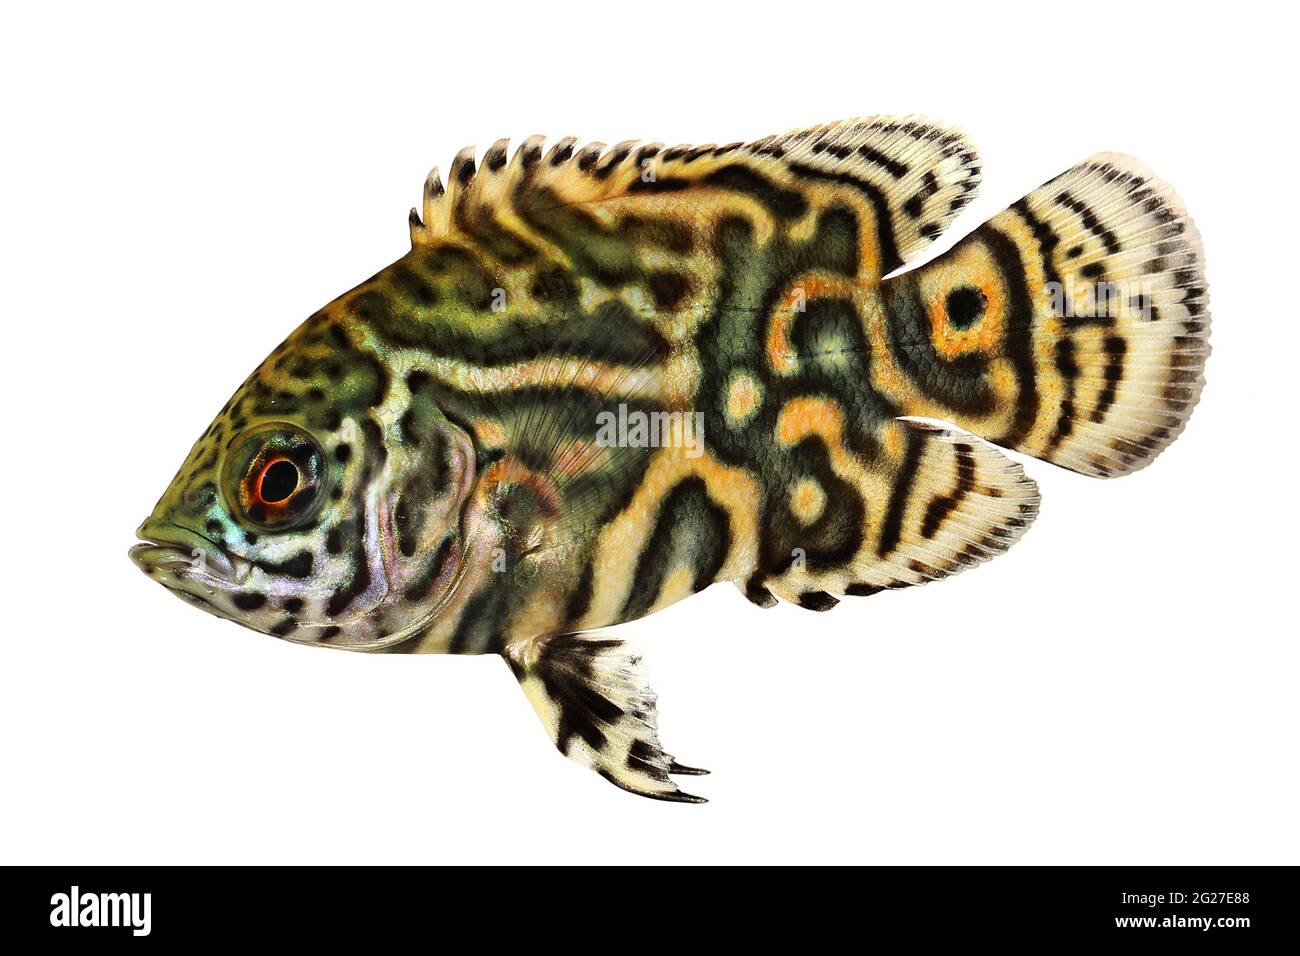 Tiger Oscar Cichlid Astronotus ocellatus aquarium fish Stock Photo